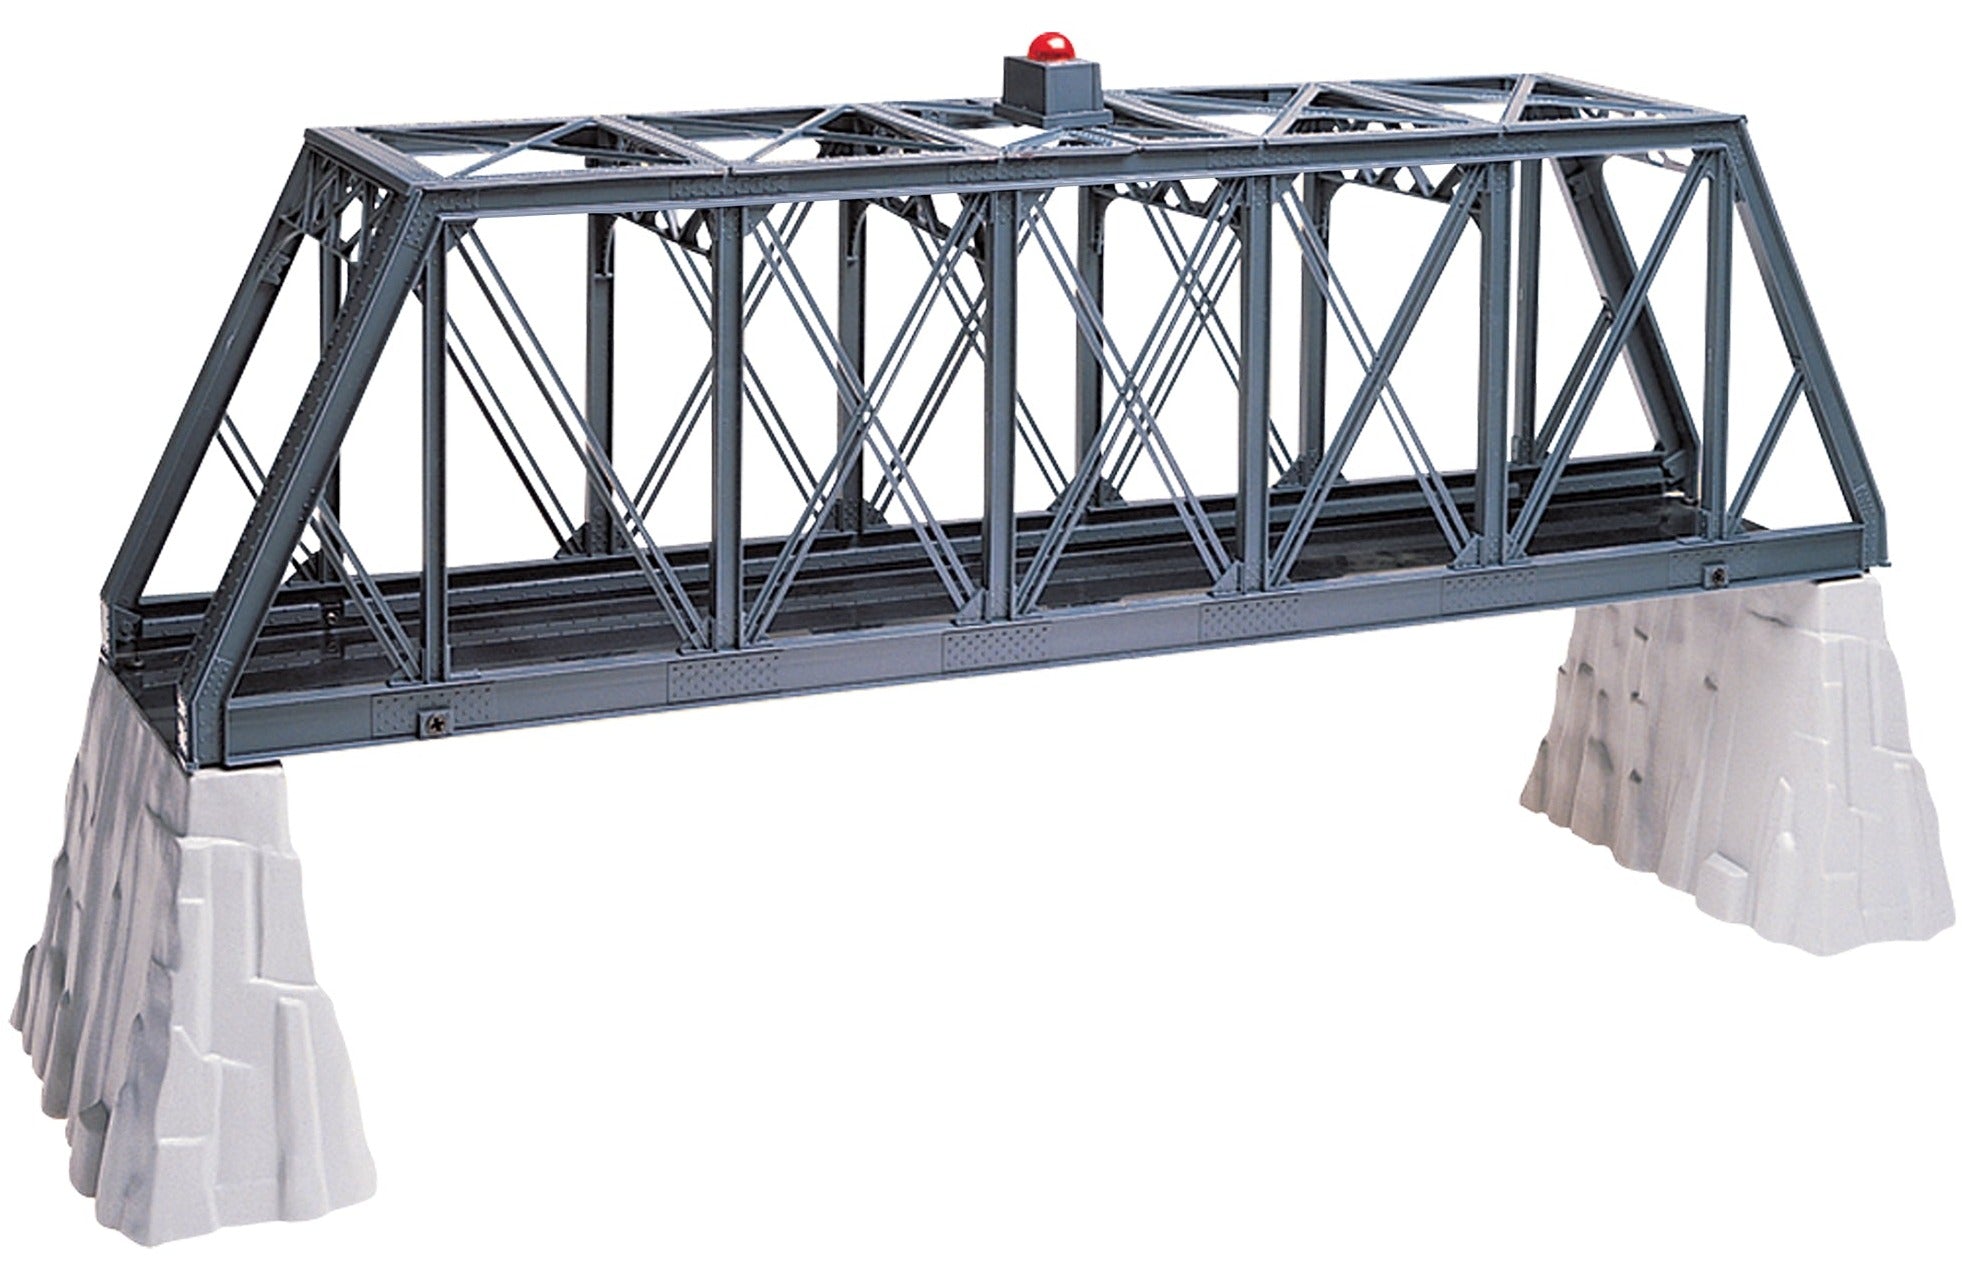 Thru Truss Bridge Kit